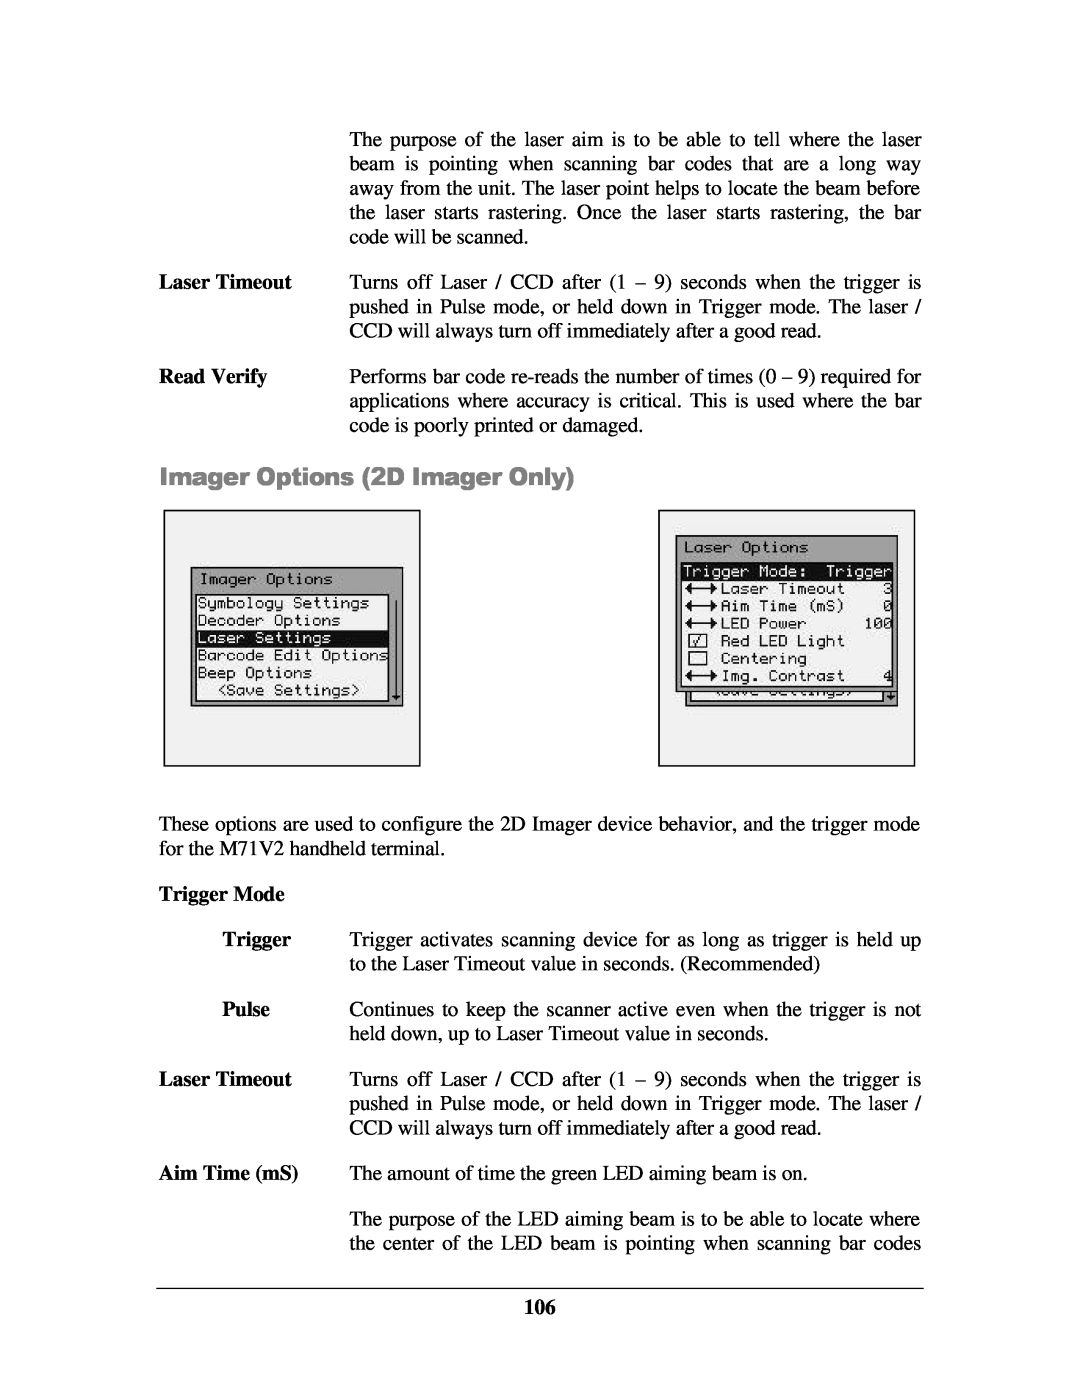 IBM M71V2 manual Imager Options 2D Imager Only, Laser Timeout, Read Verify, Trigger Mode 